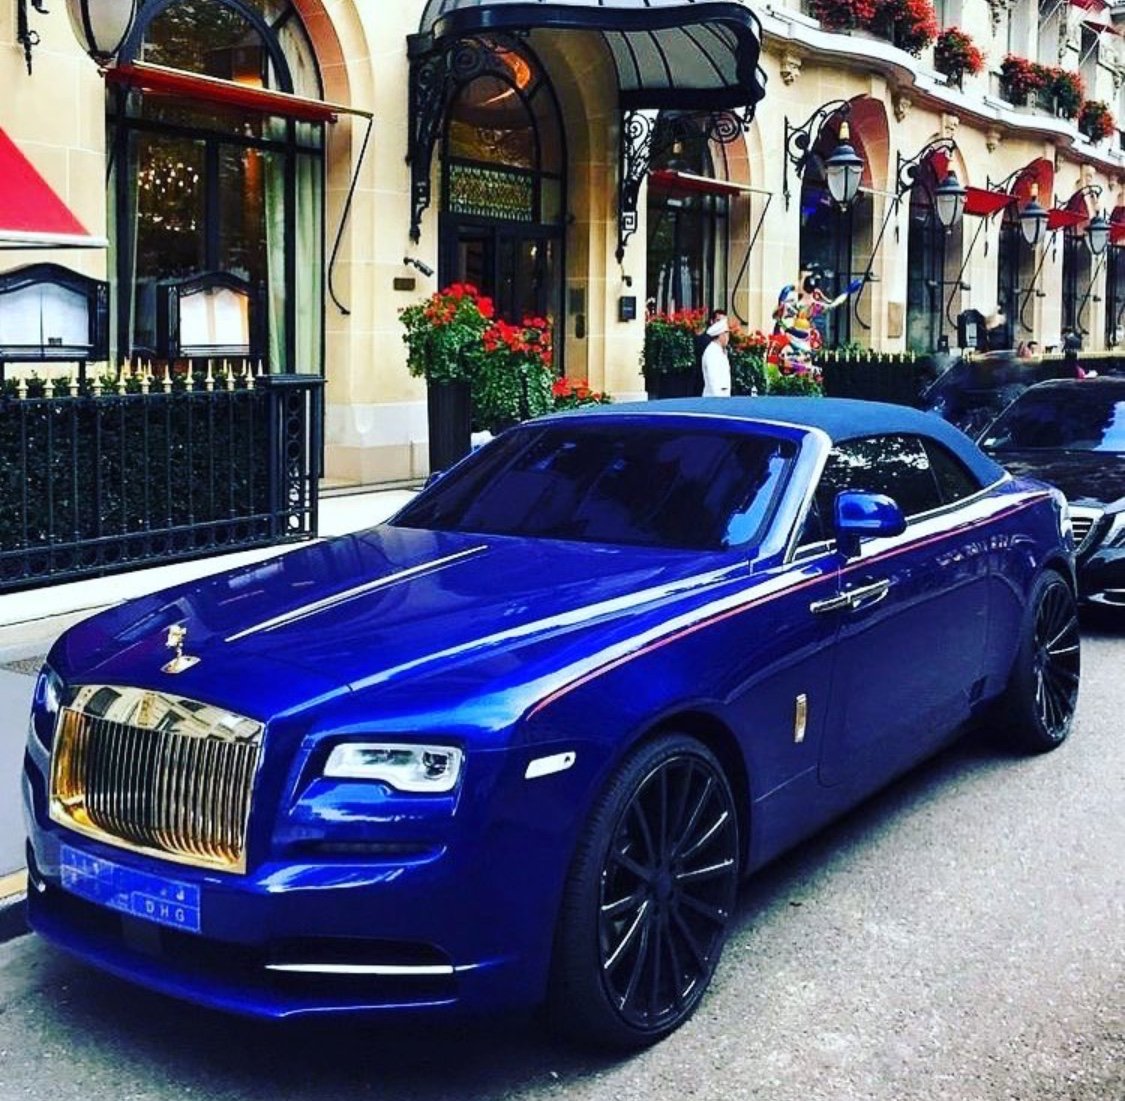 Автомобиль роллс ройс. Роллс Ройс. Роллс Ройс Luxury. Rolls Royce машина Rolls Royce.